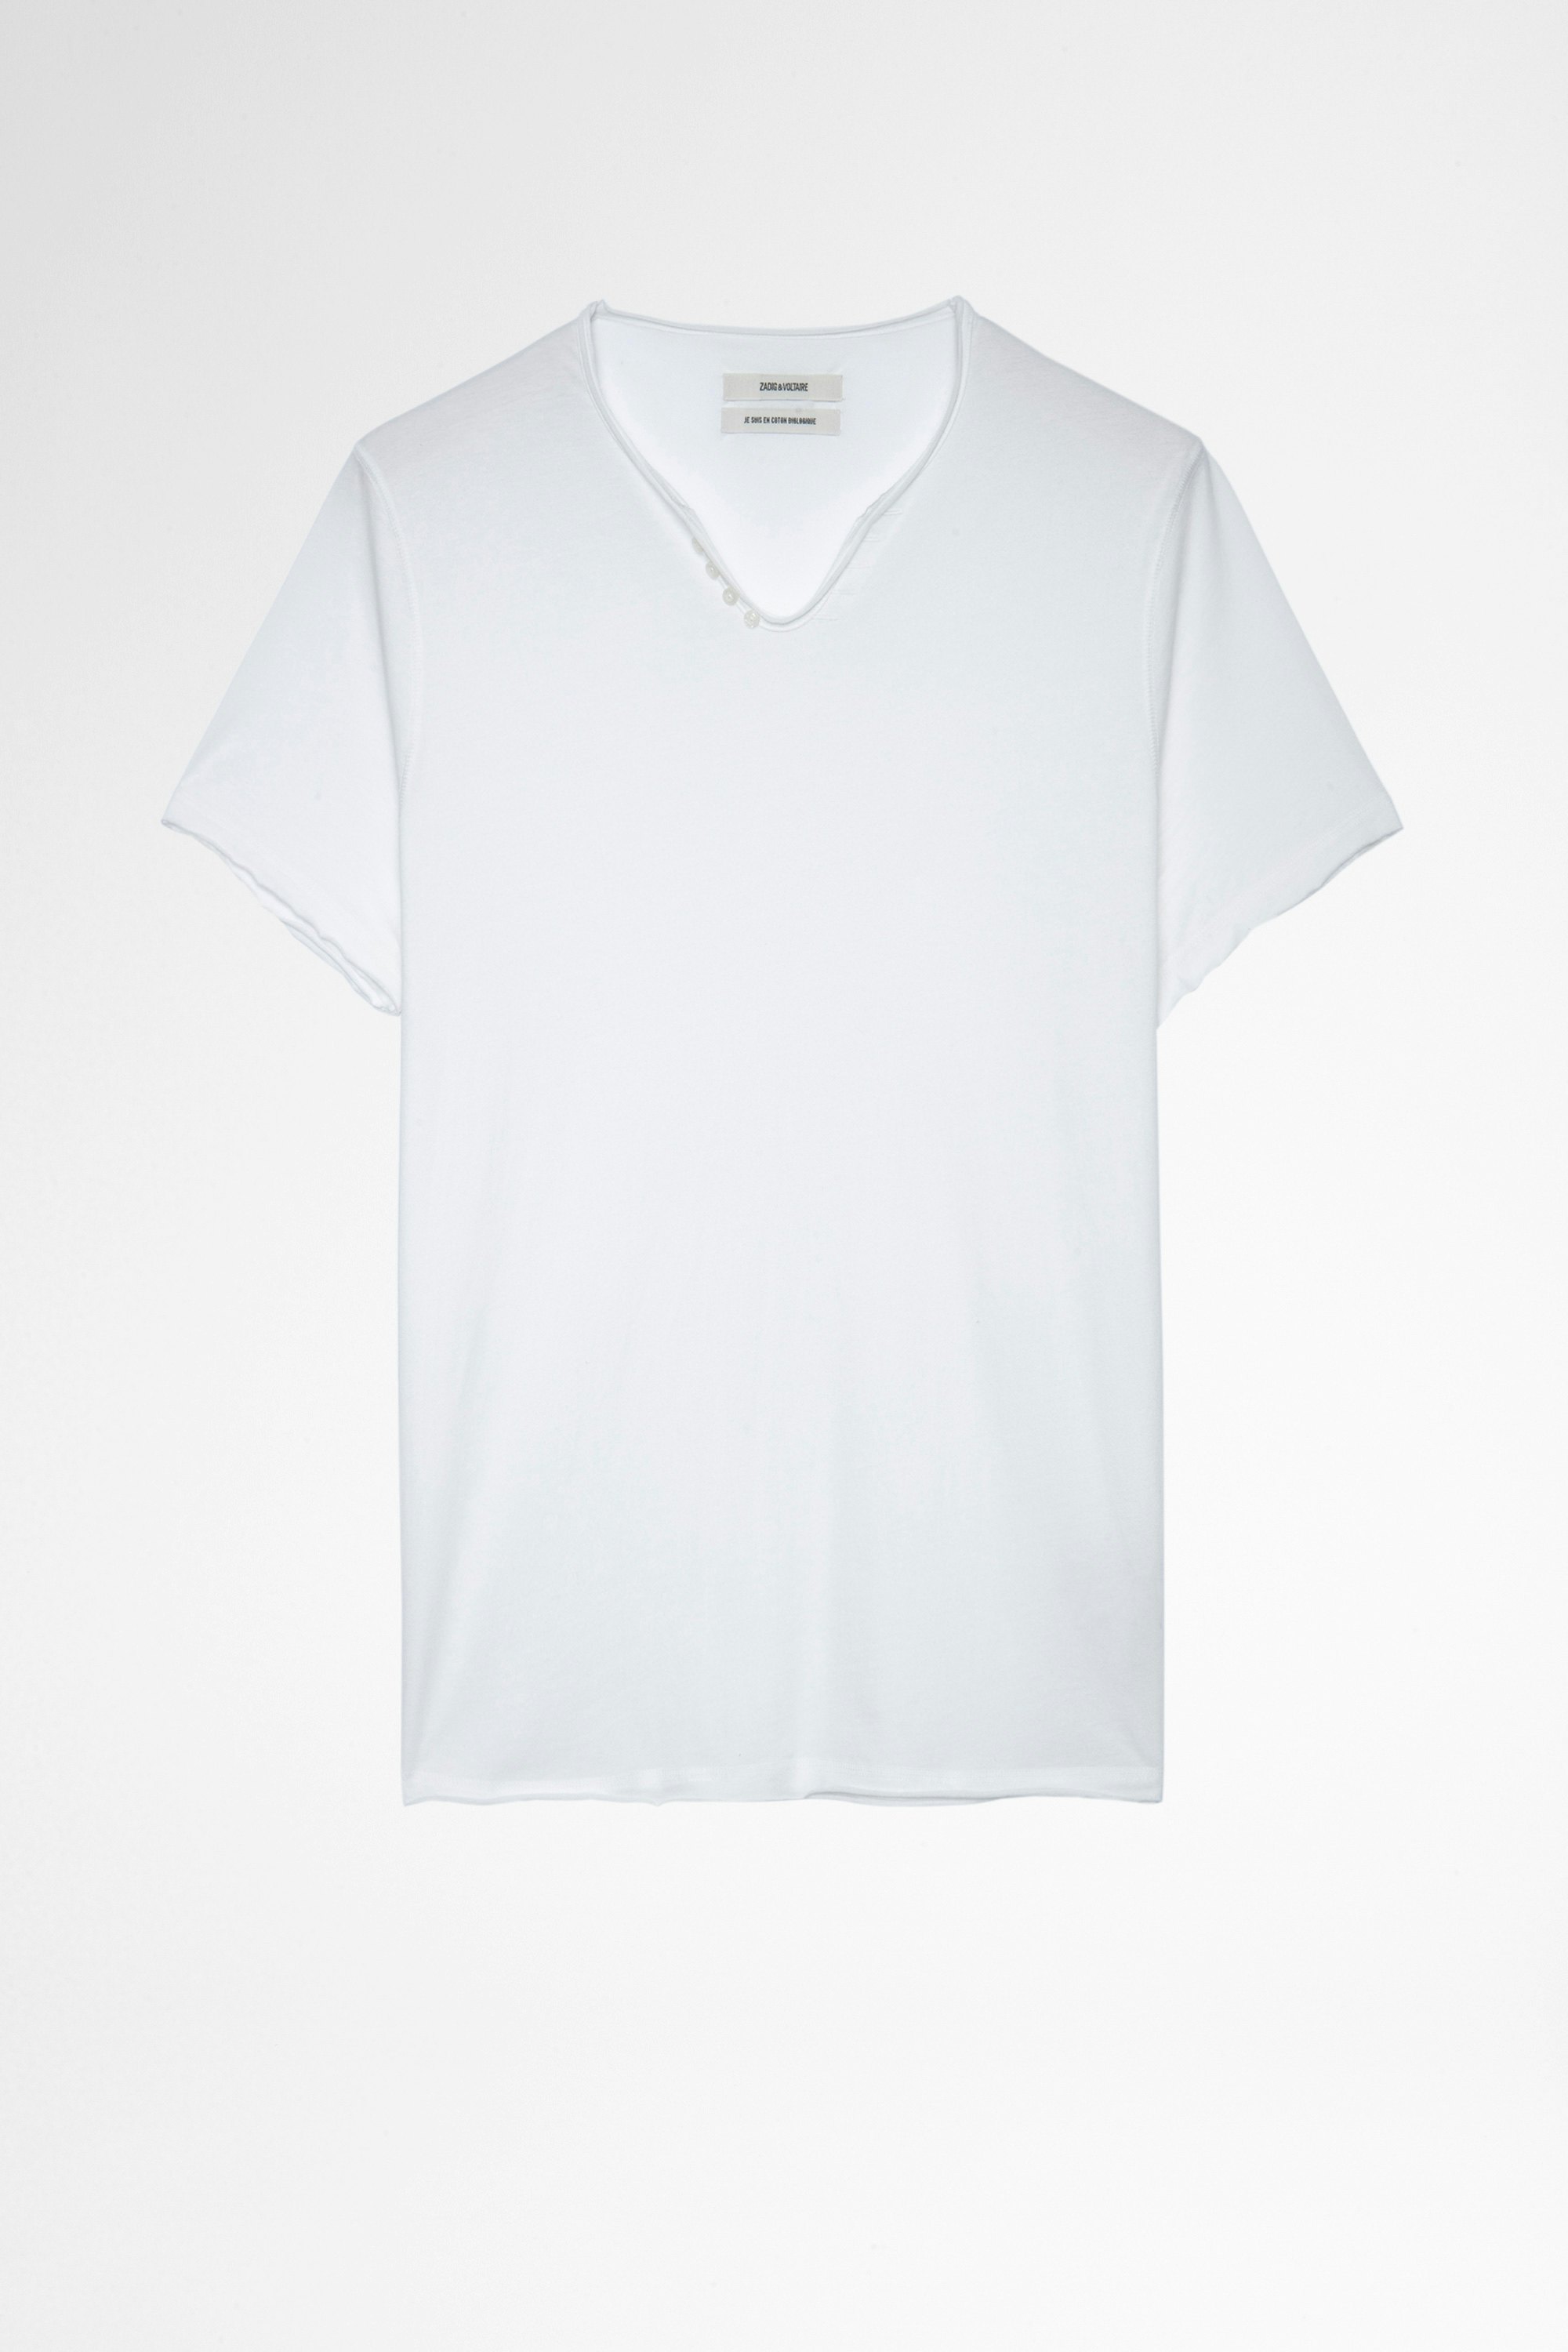 Monastir T-shirt Men’s white T-shirt